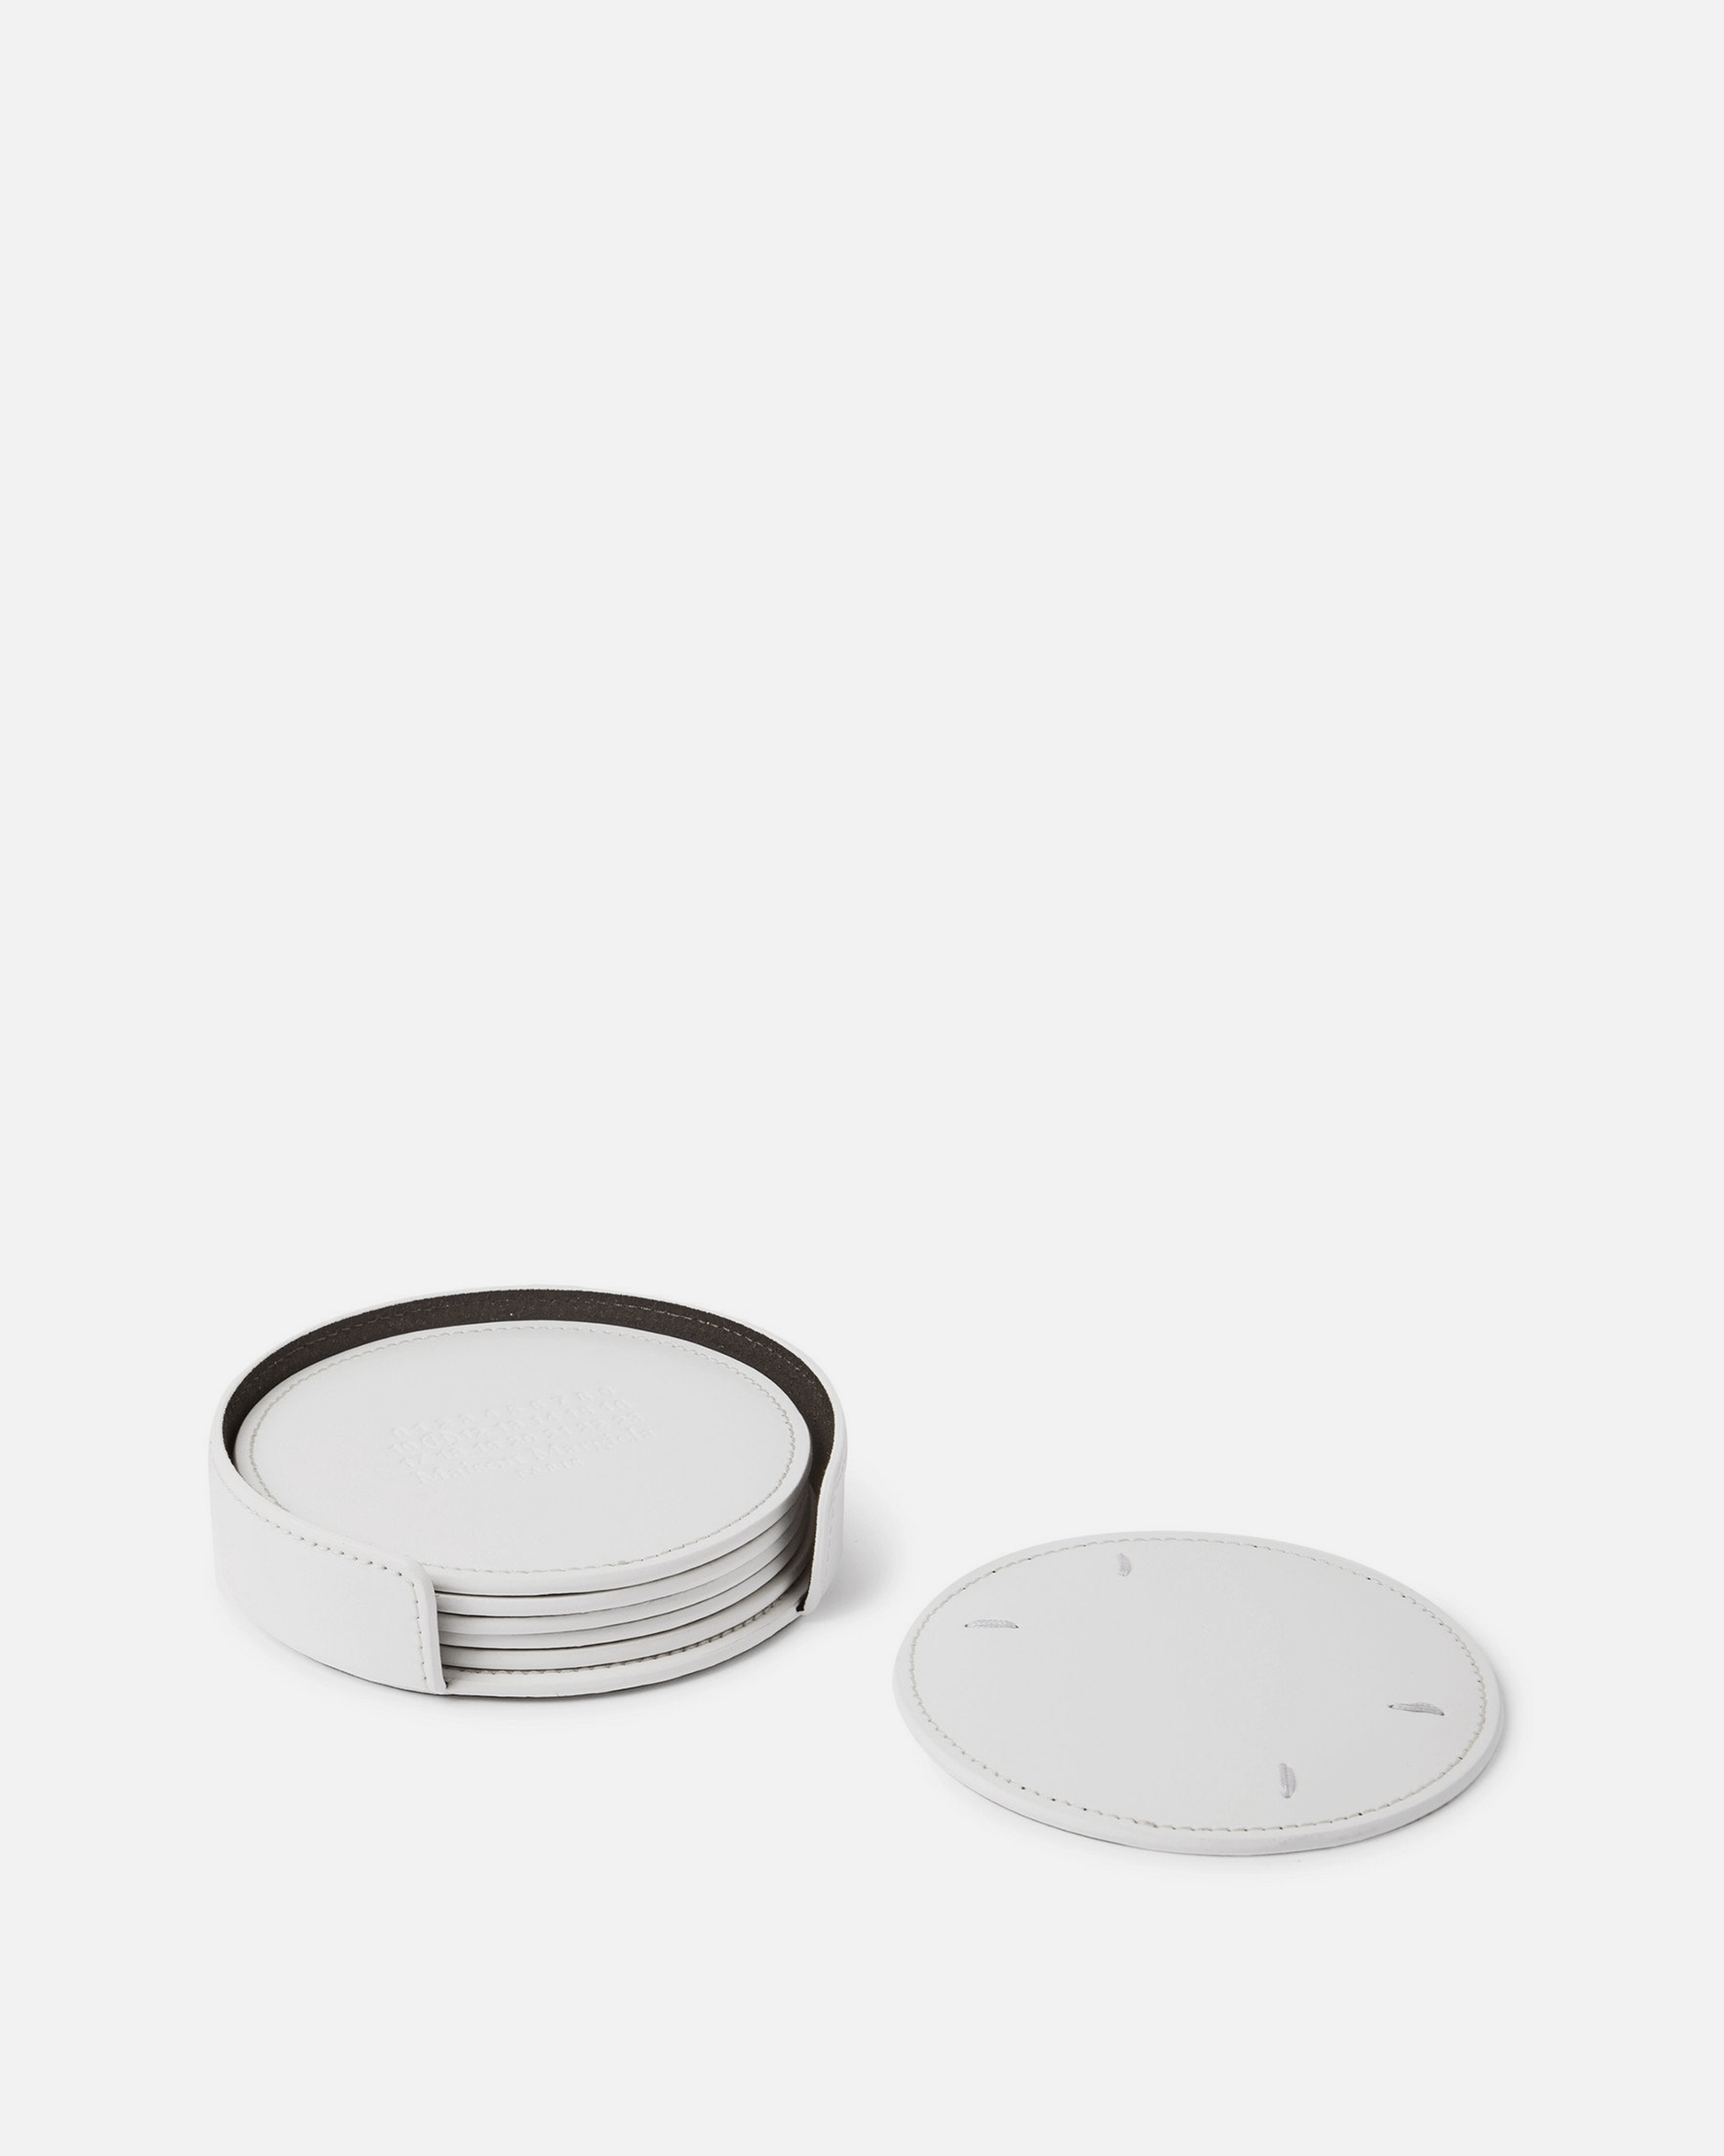 Maison Margiela Leather Goods Leather Coasters in White